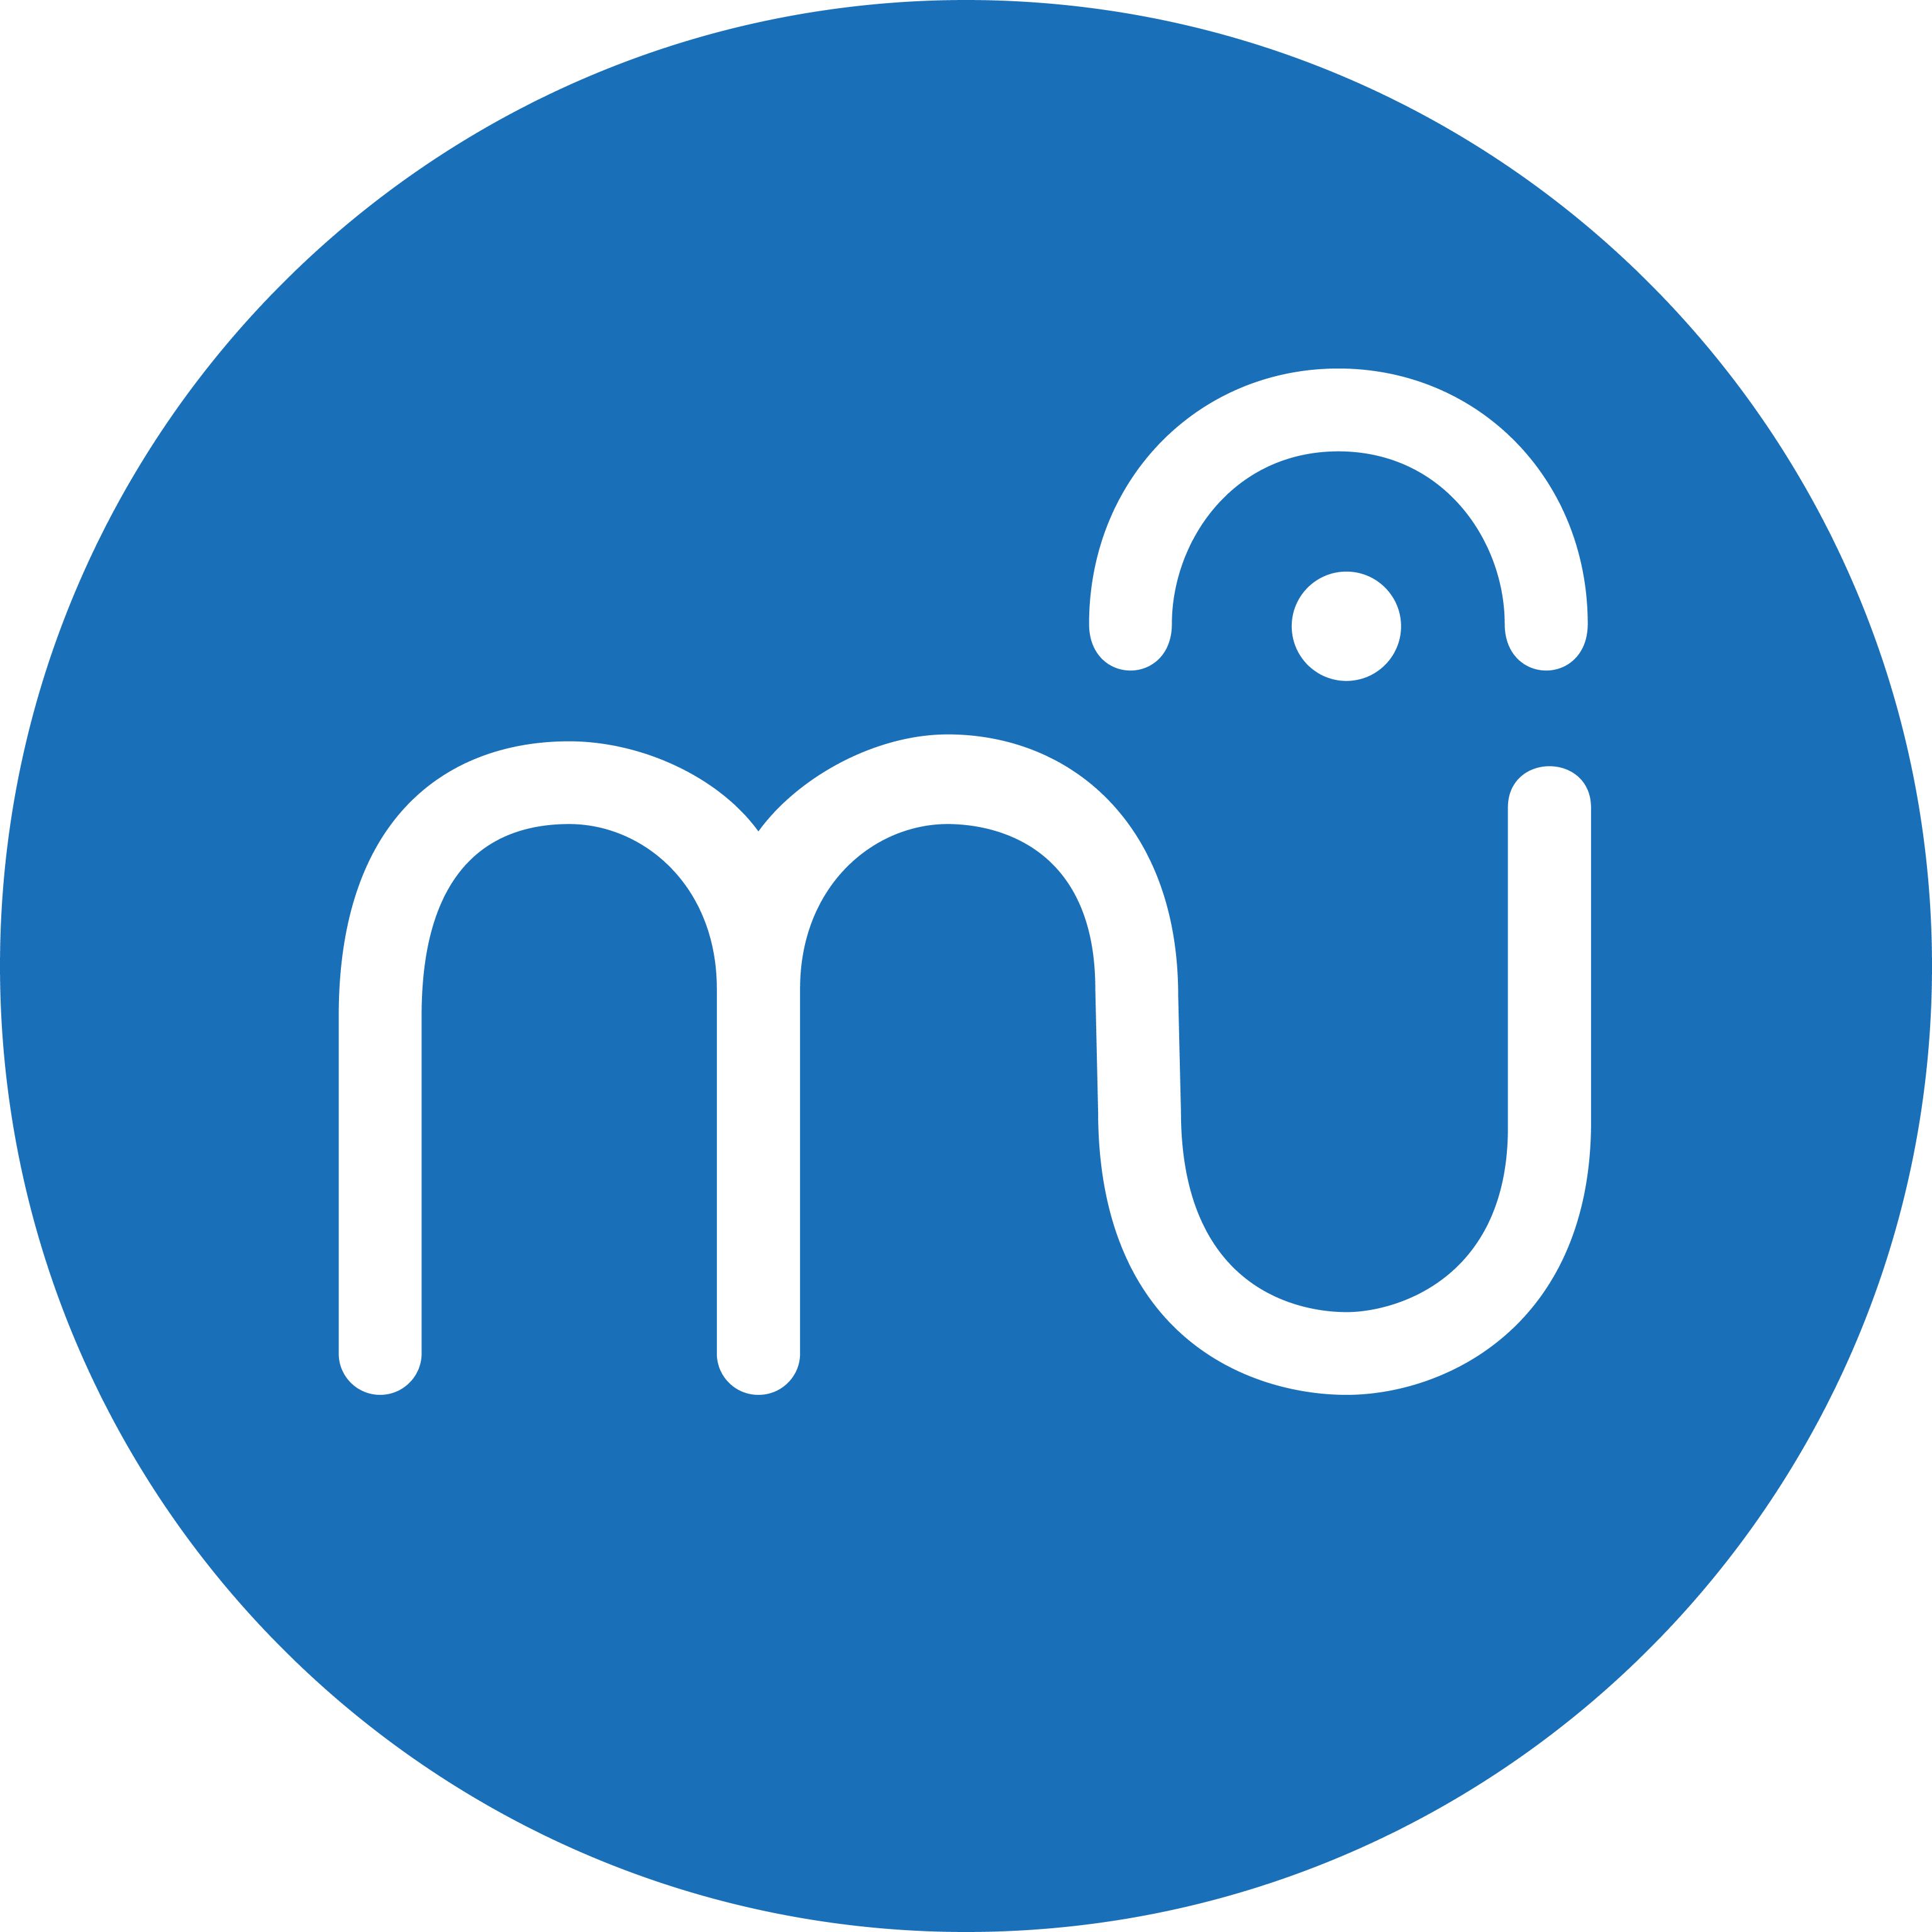 3X Logo - Logos and Graphics | MuseScore